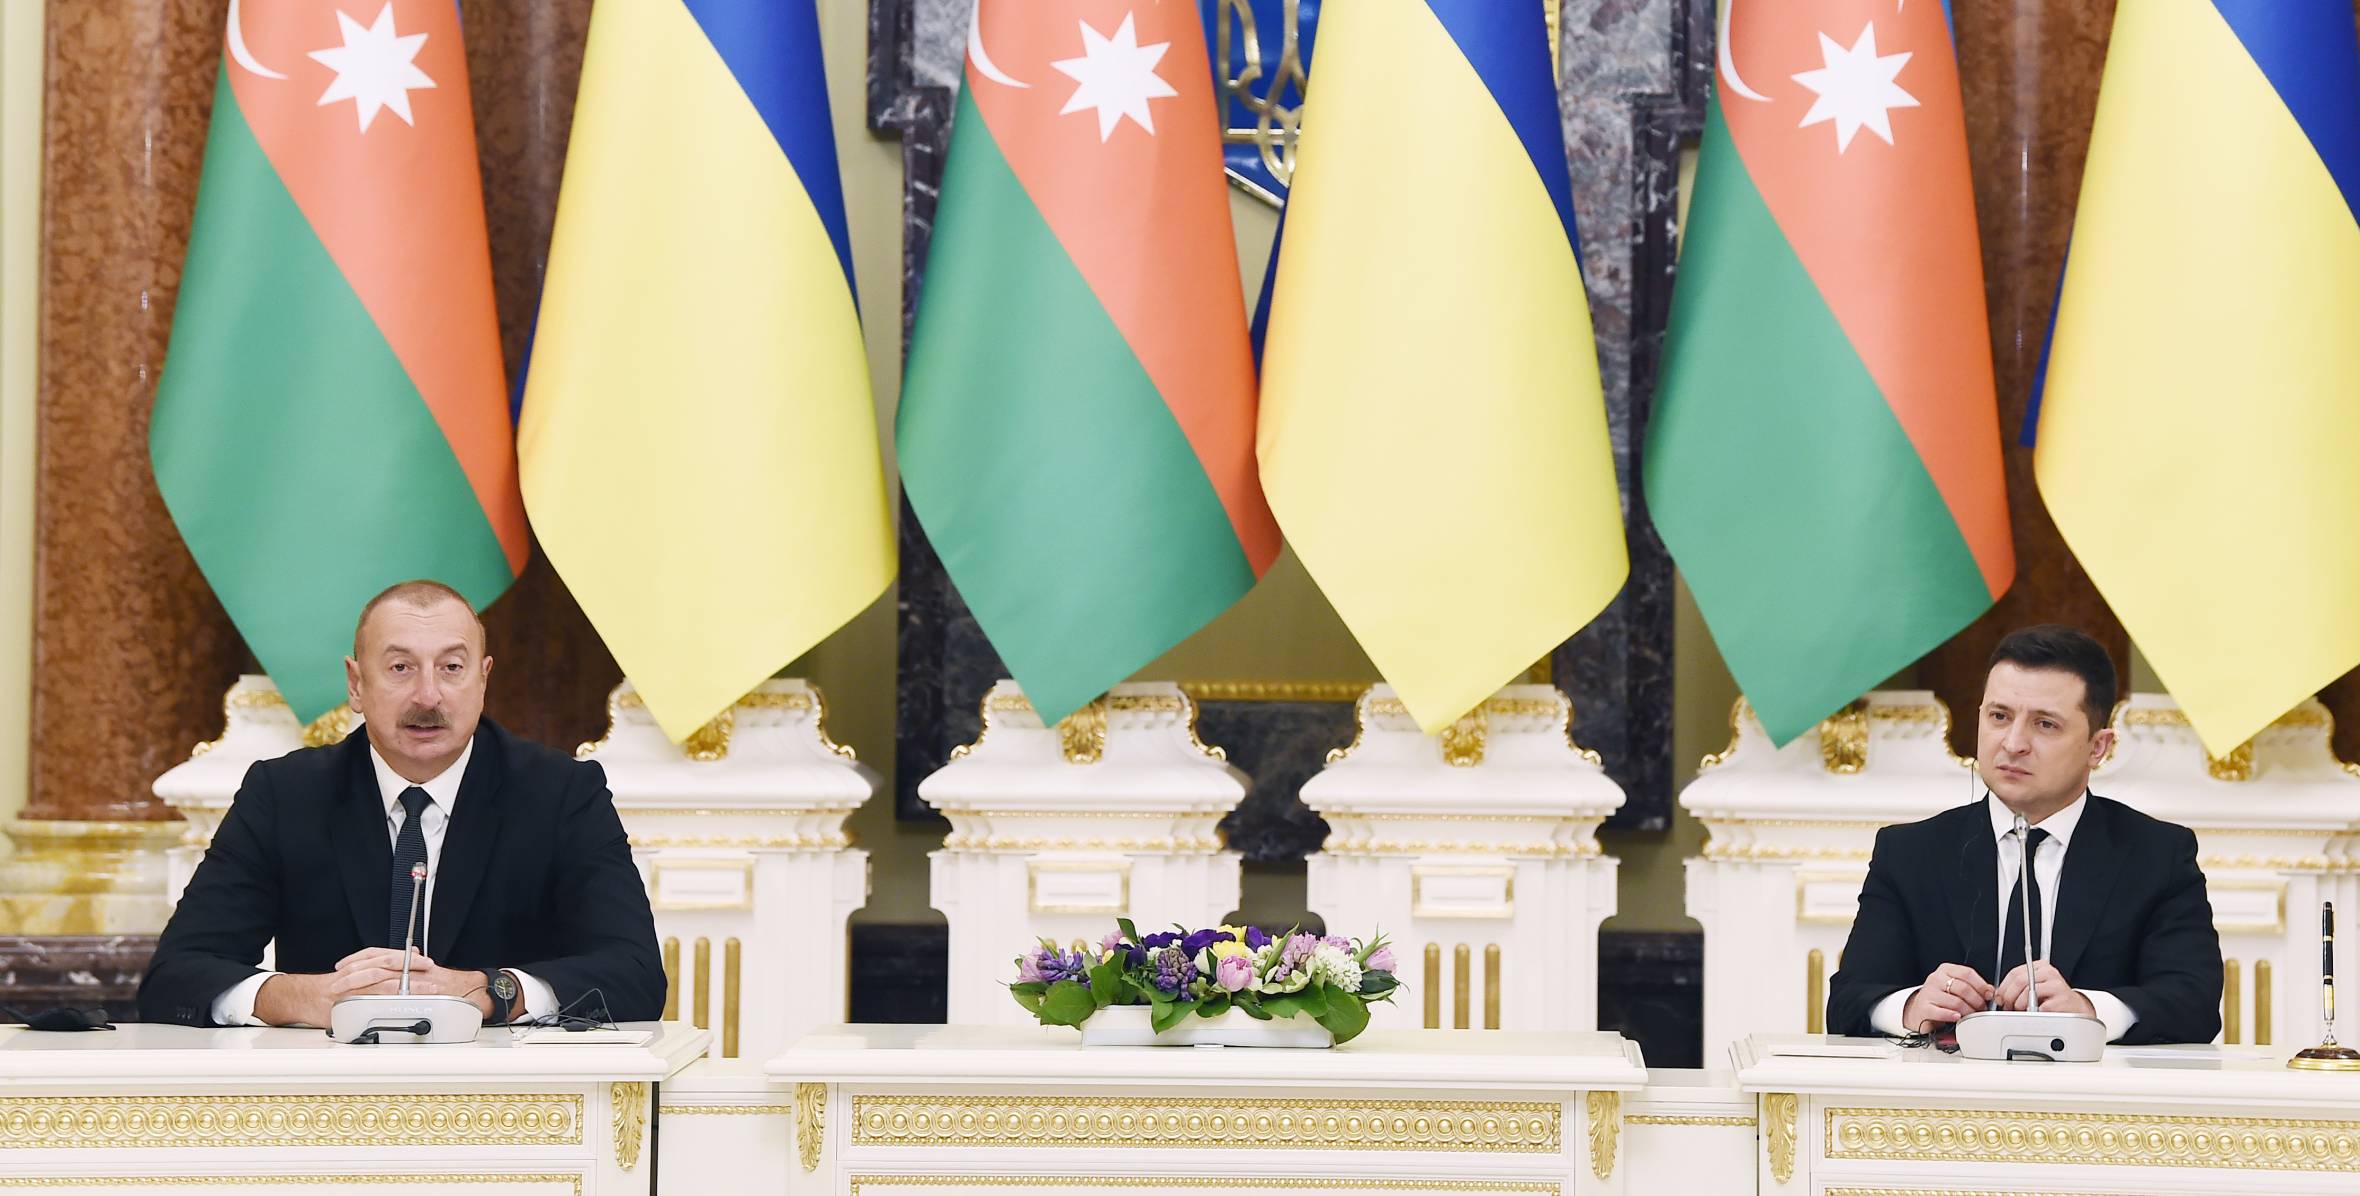 The Presidents of Azerbaijan and Ukraine made press statements